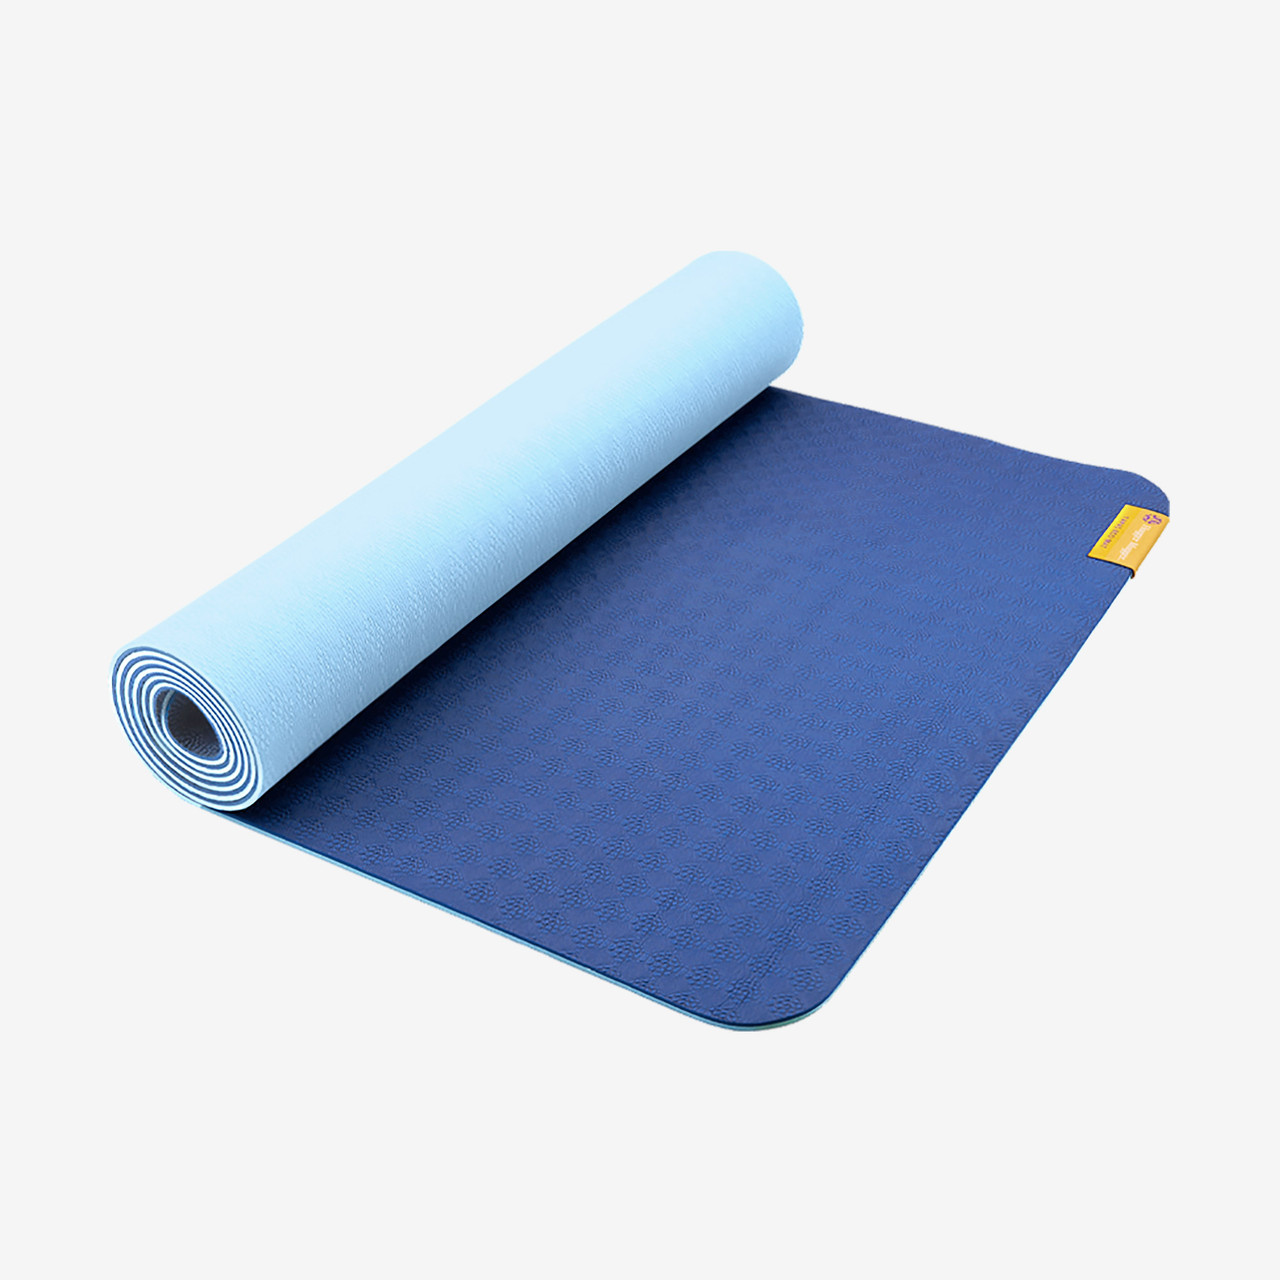 DAWAY Eco Friendly TPE Exercise mat